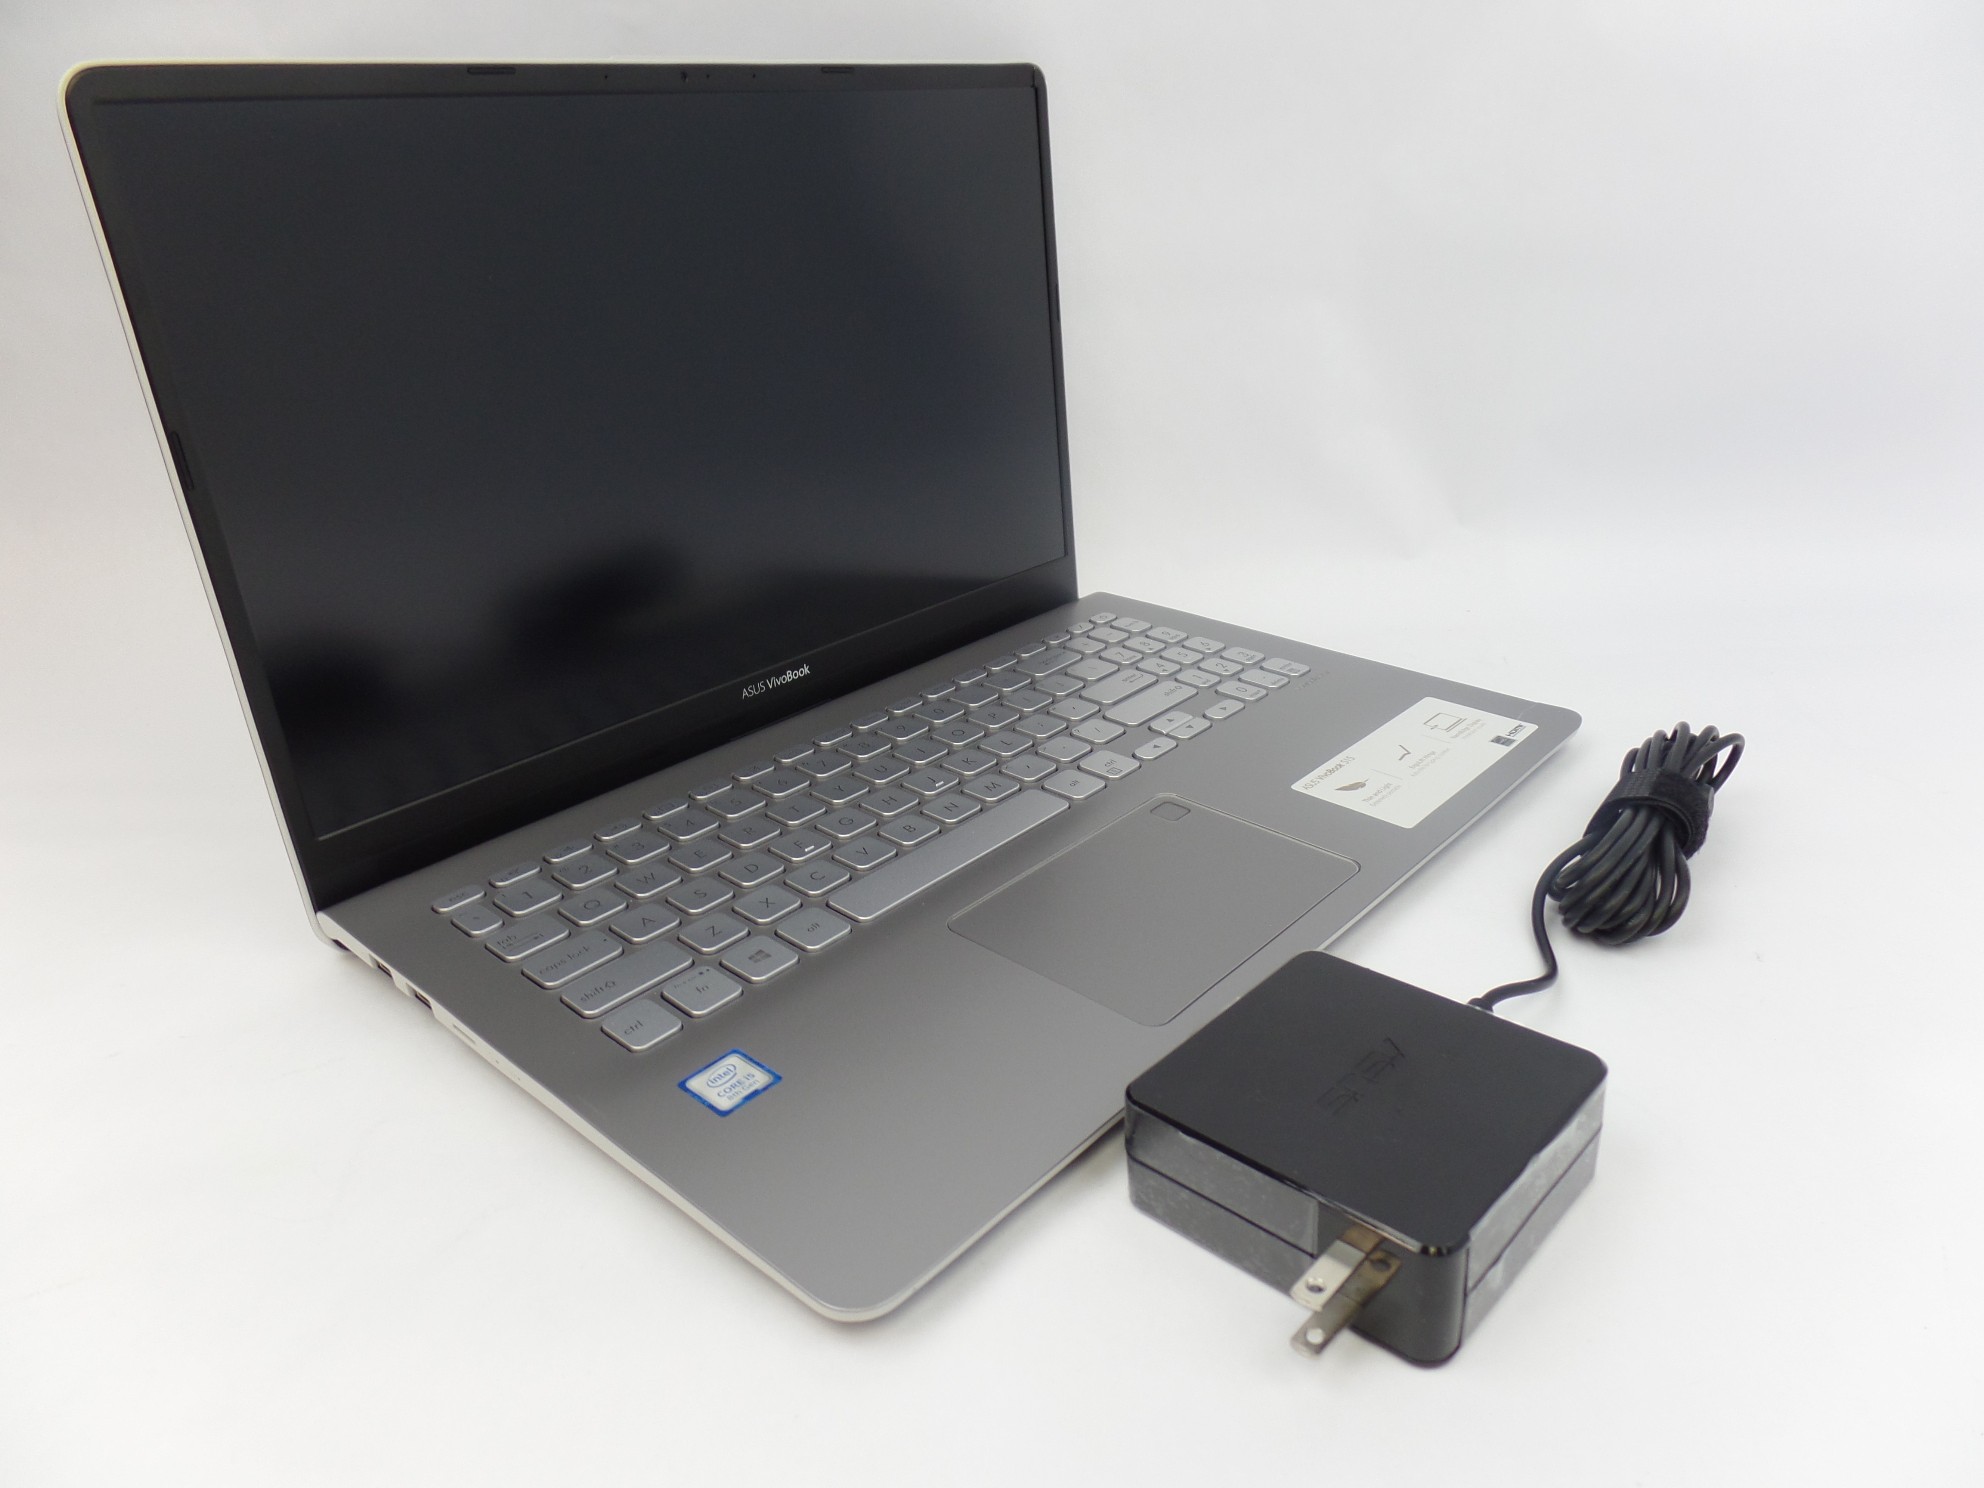 ASUS VivoBook S530UA-DB51 15.6" FHD i5-8250U 1.6GHz 8GB 256GB SSD W10H Laptop U1